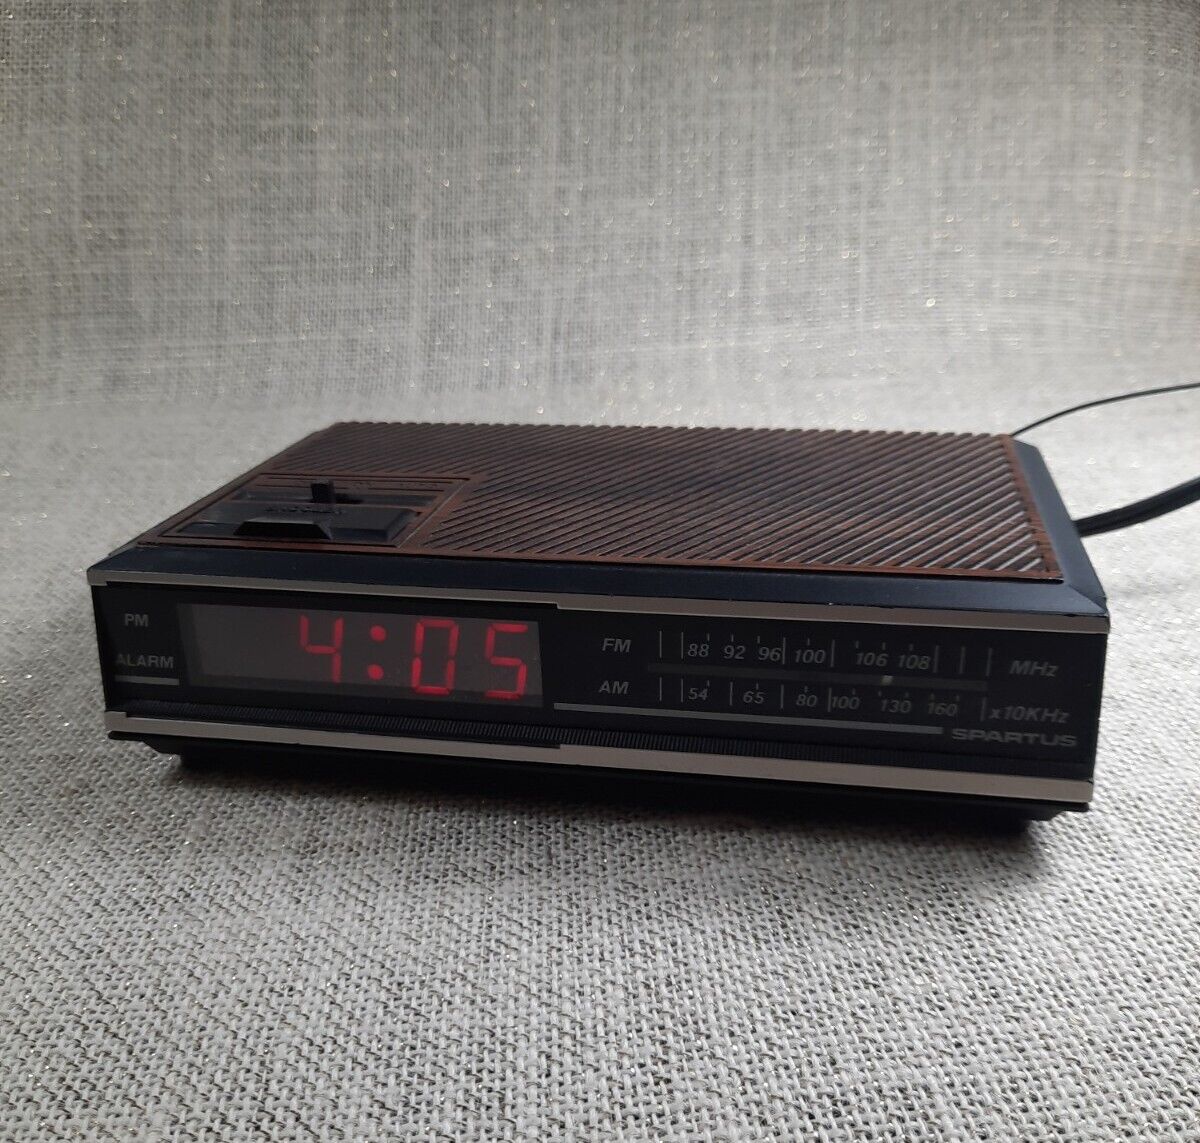 Vintage 80\'s Spartus Digital LED Alarm Clock AM-FM Radio Model 0107 Tested Works